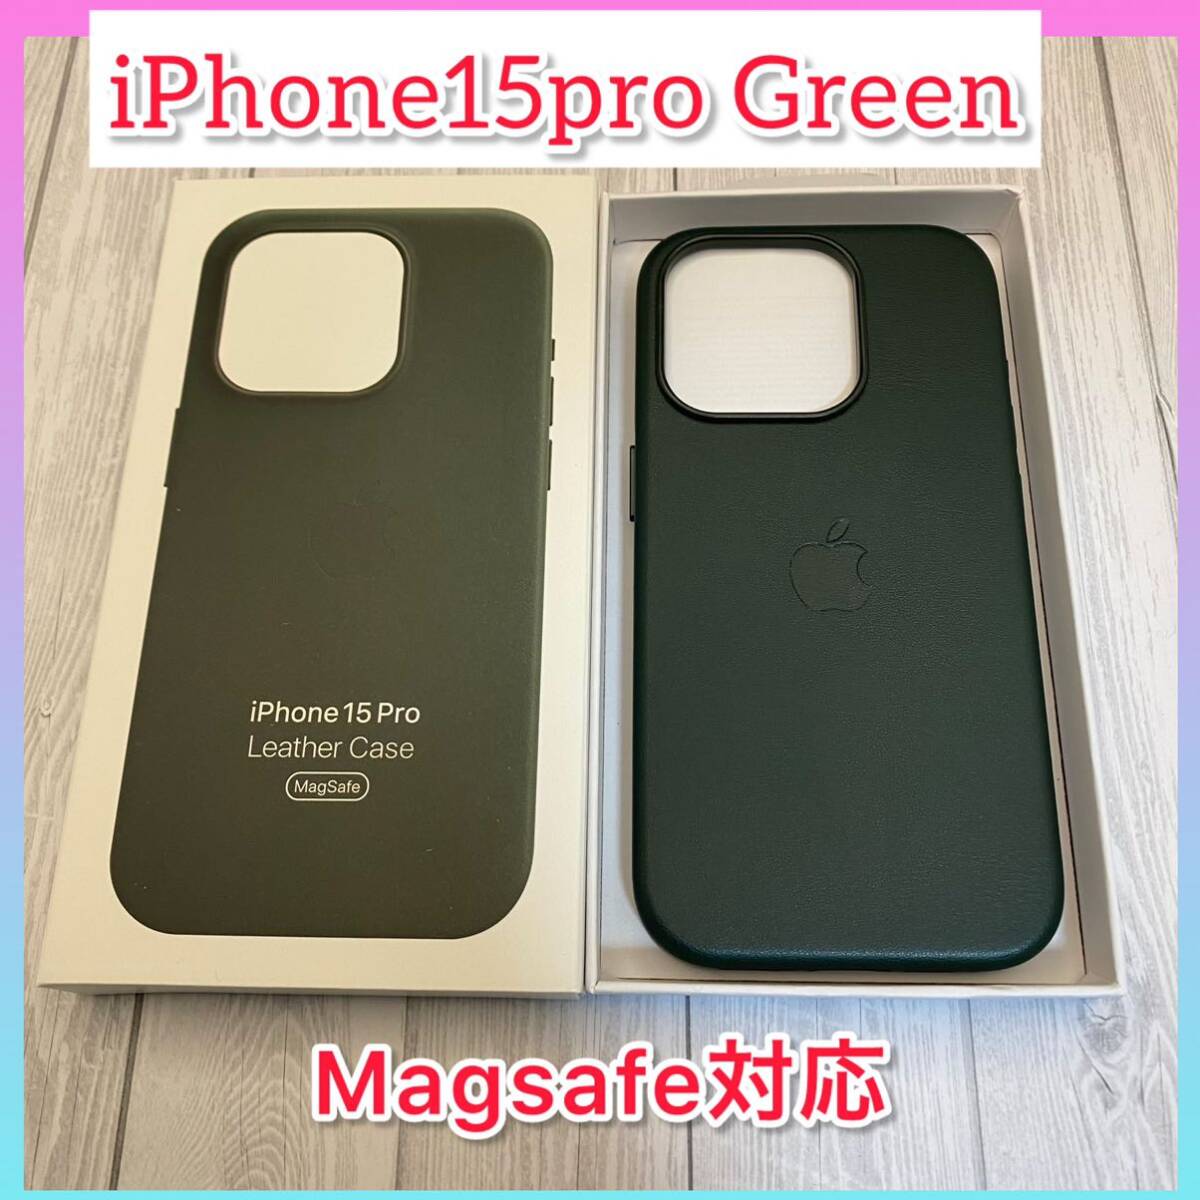 iPhone カバー iPhone15proケース レザーケース Magsafe対応ケース 純正互換品 互換カバー マグセーフ対応 スマホカバー アイフォンケース_画像1